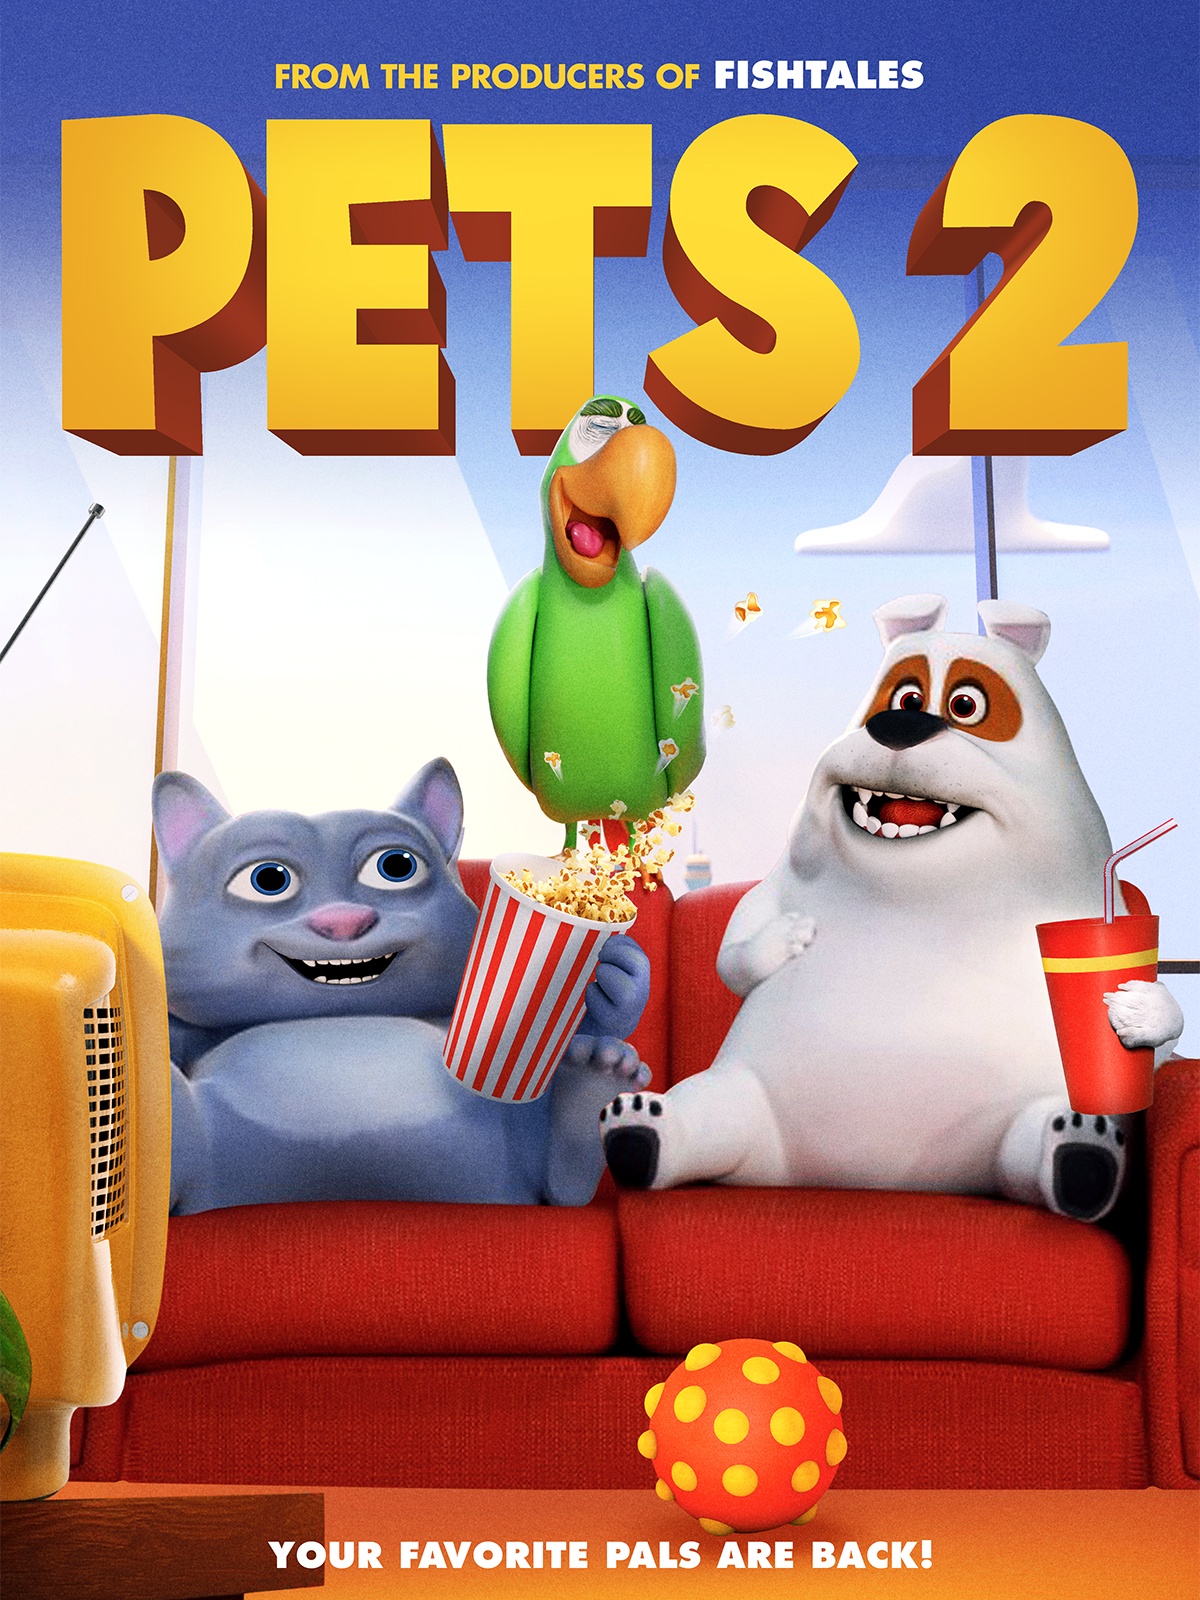 Pets 2 (2021)